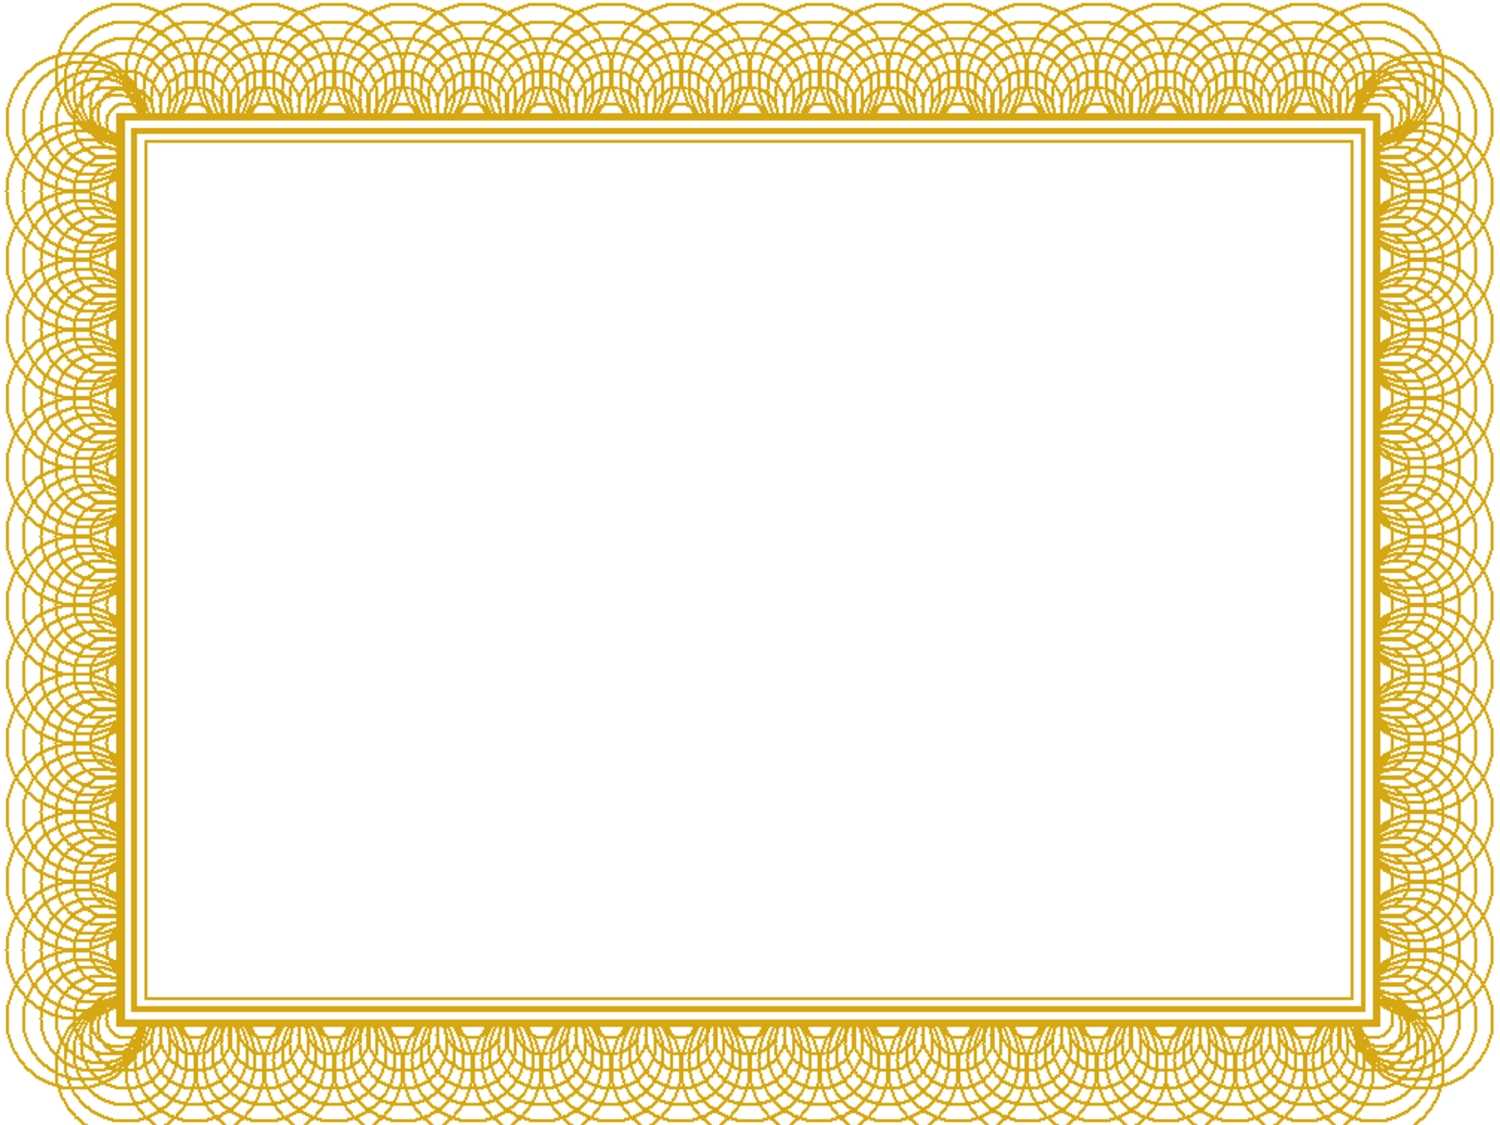 Award Certificate Border Template Pertaining To Gold Regarding Award Certificate Border Template